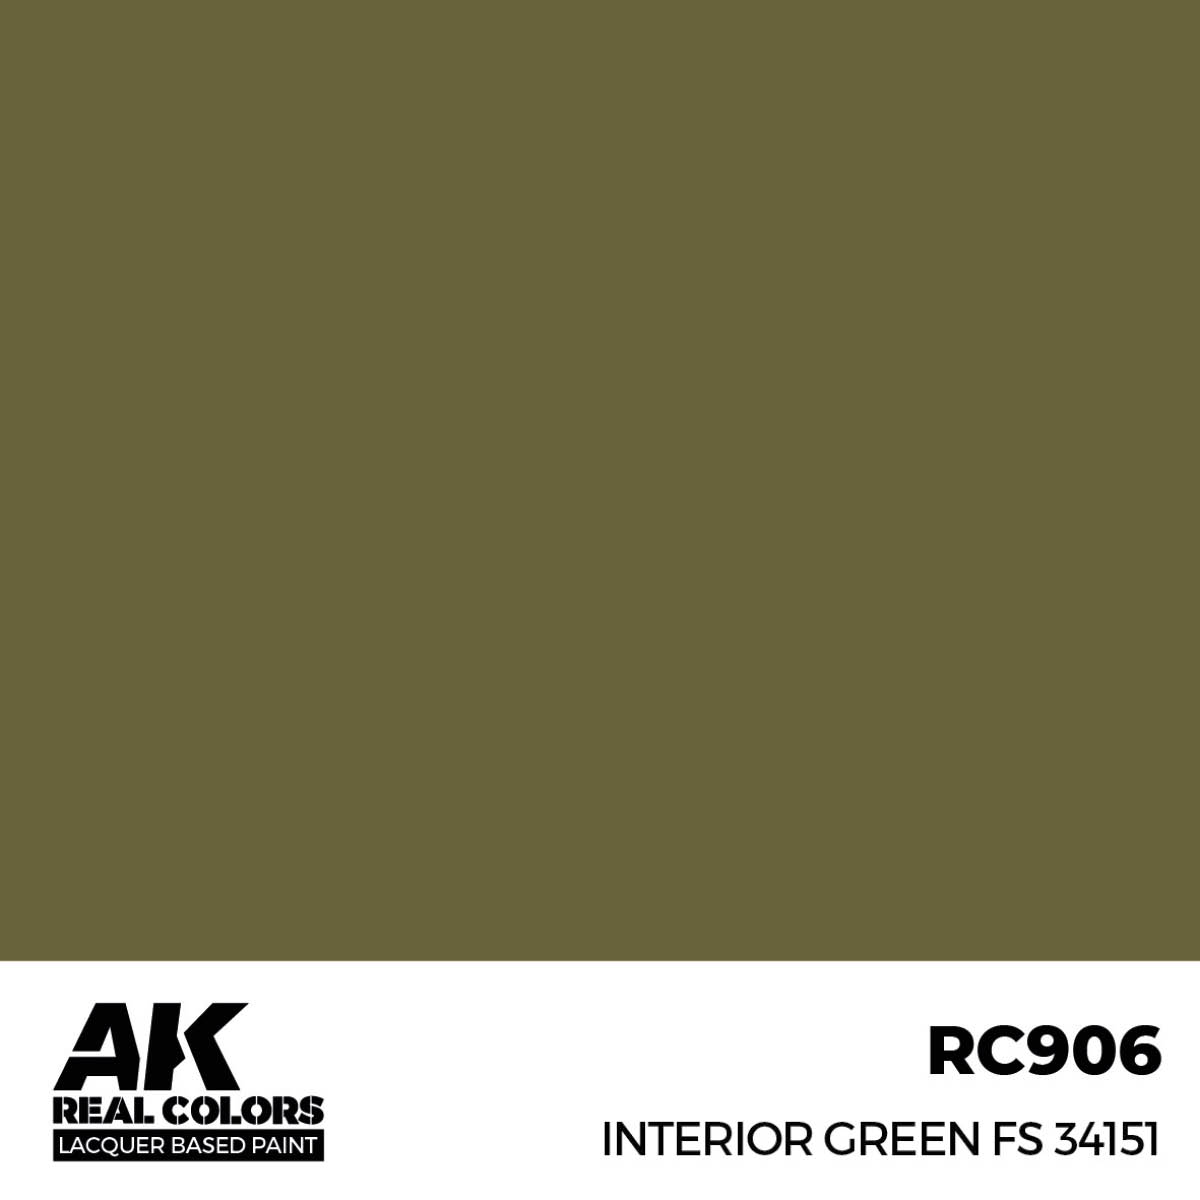 Interior Green FS 34151